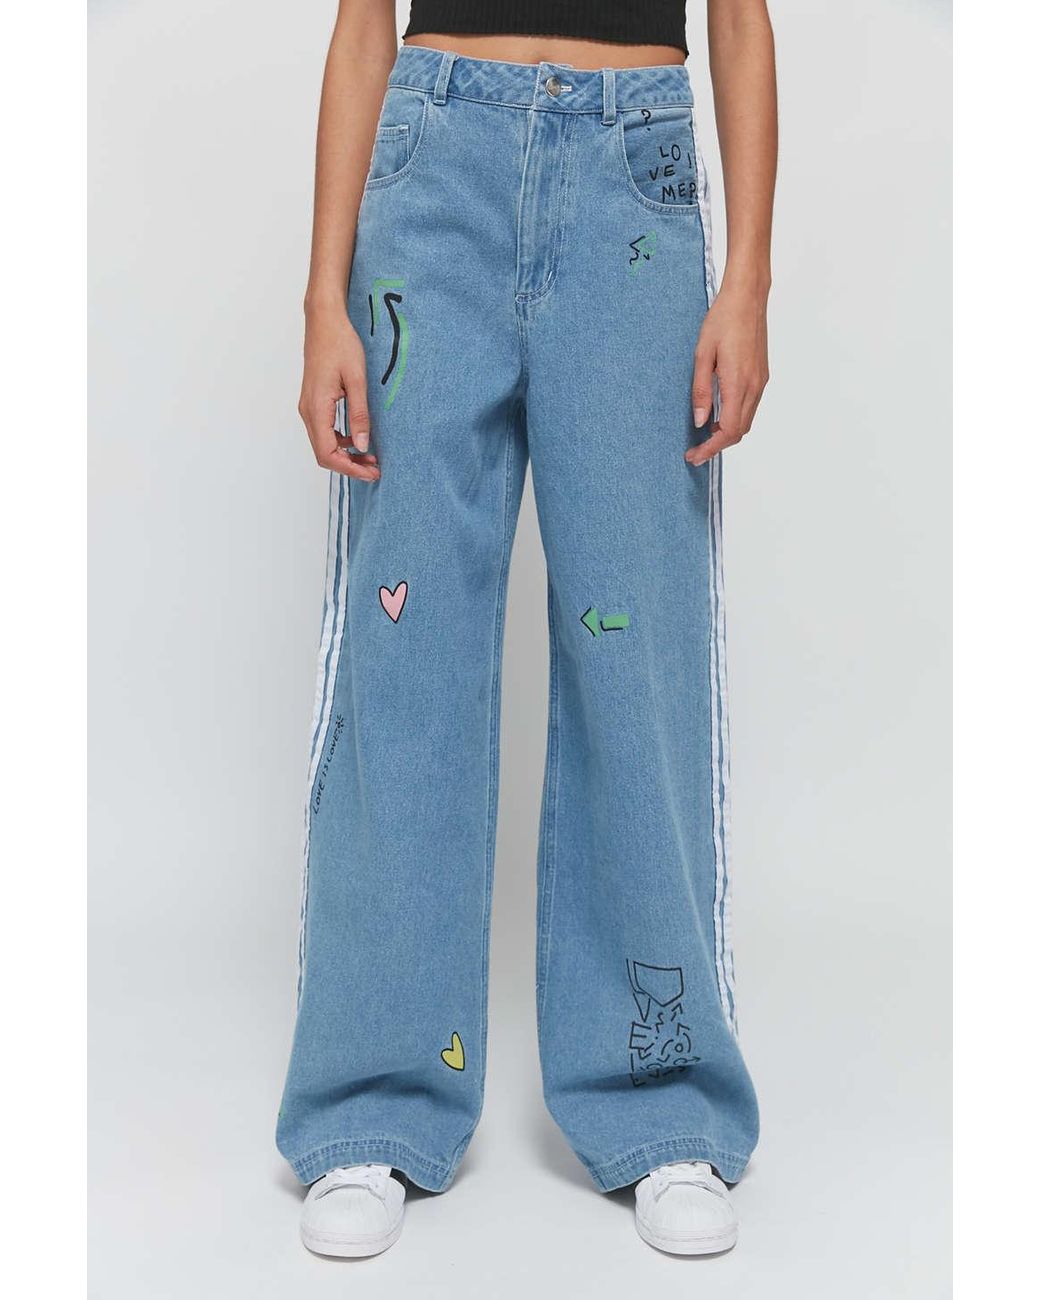 adidas Originals X Fiorucci Snap Button Jean in Blue | Lyst